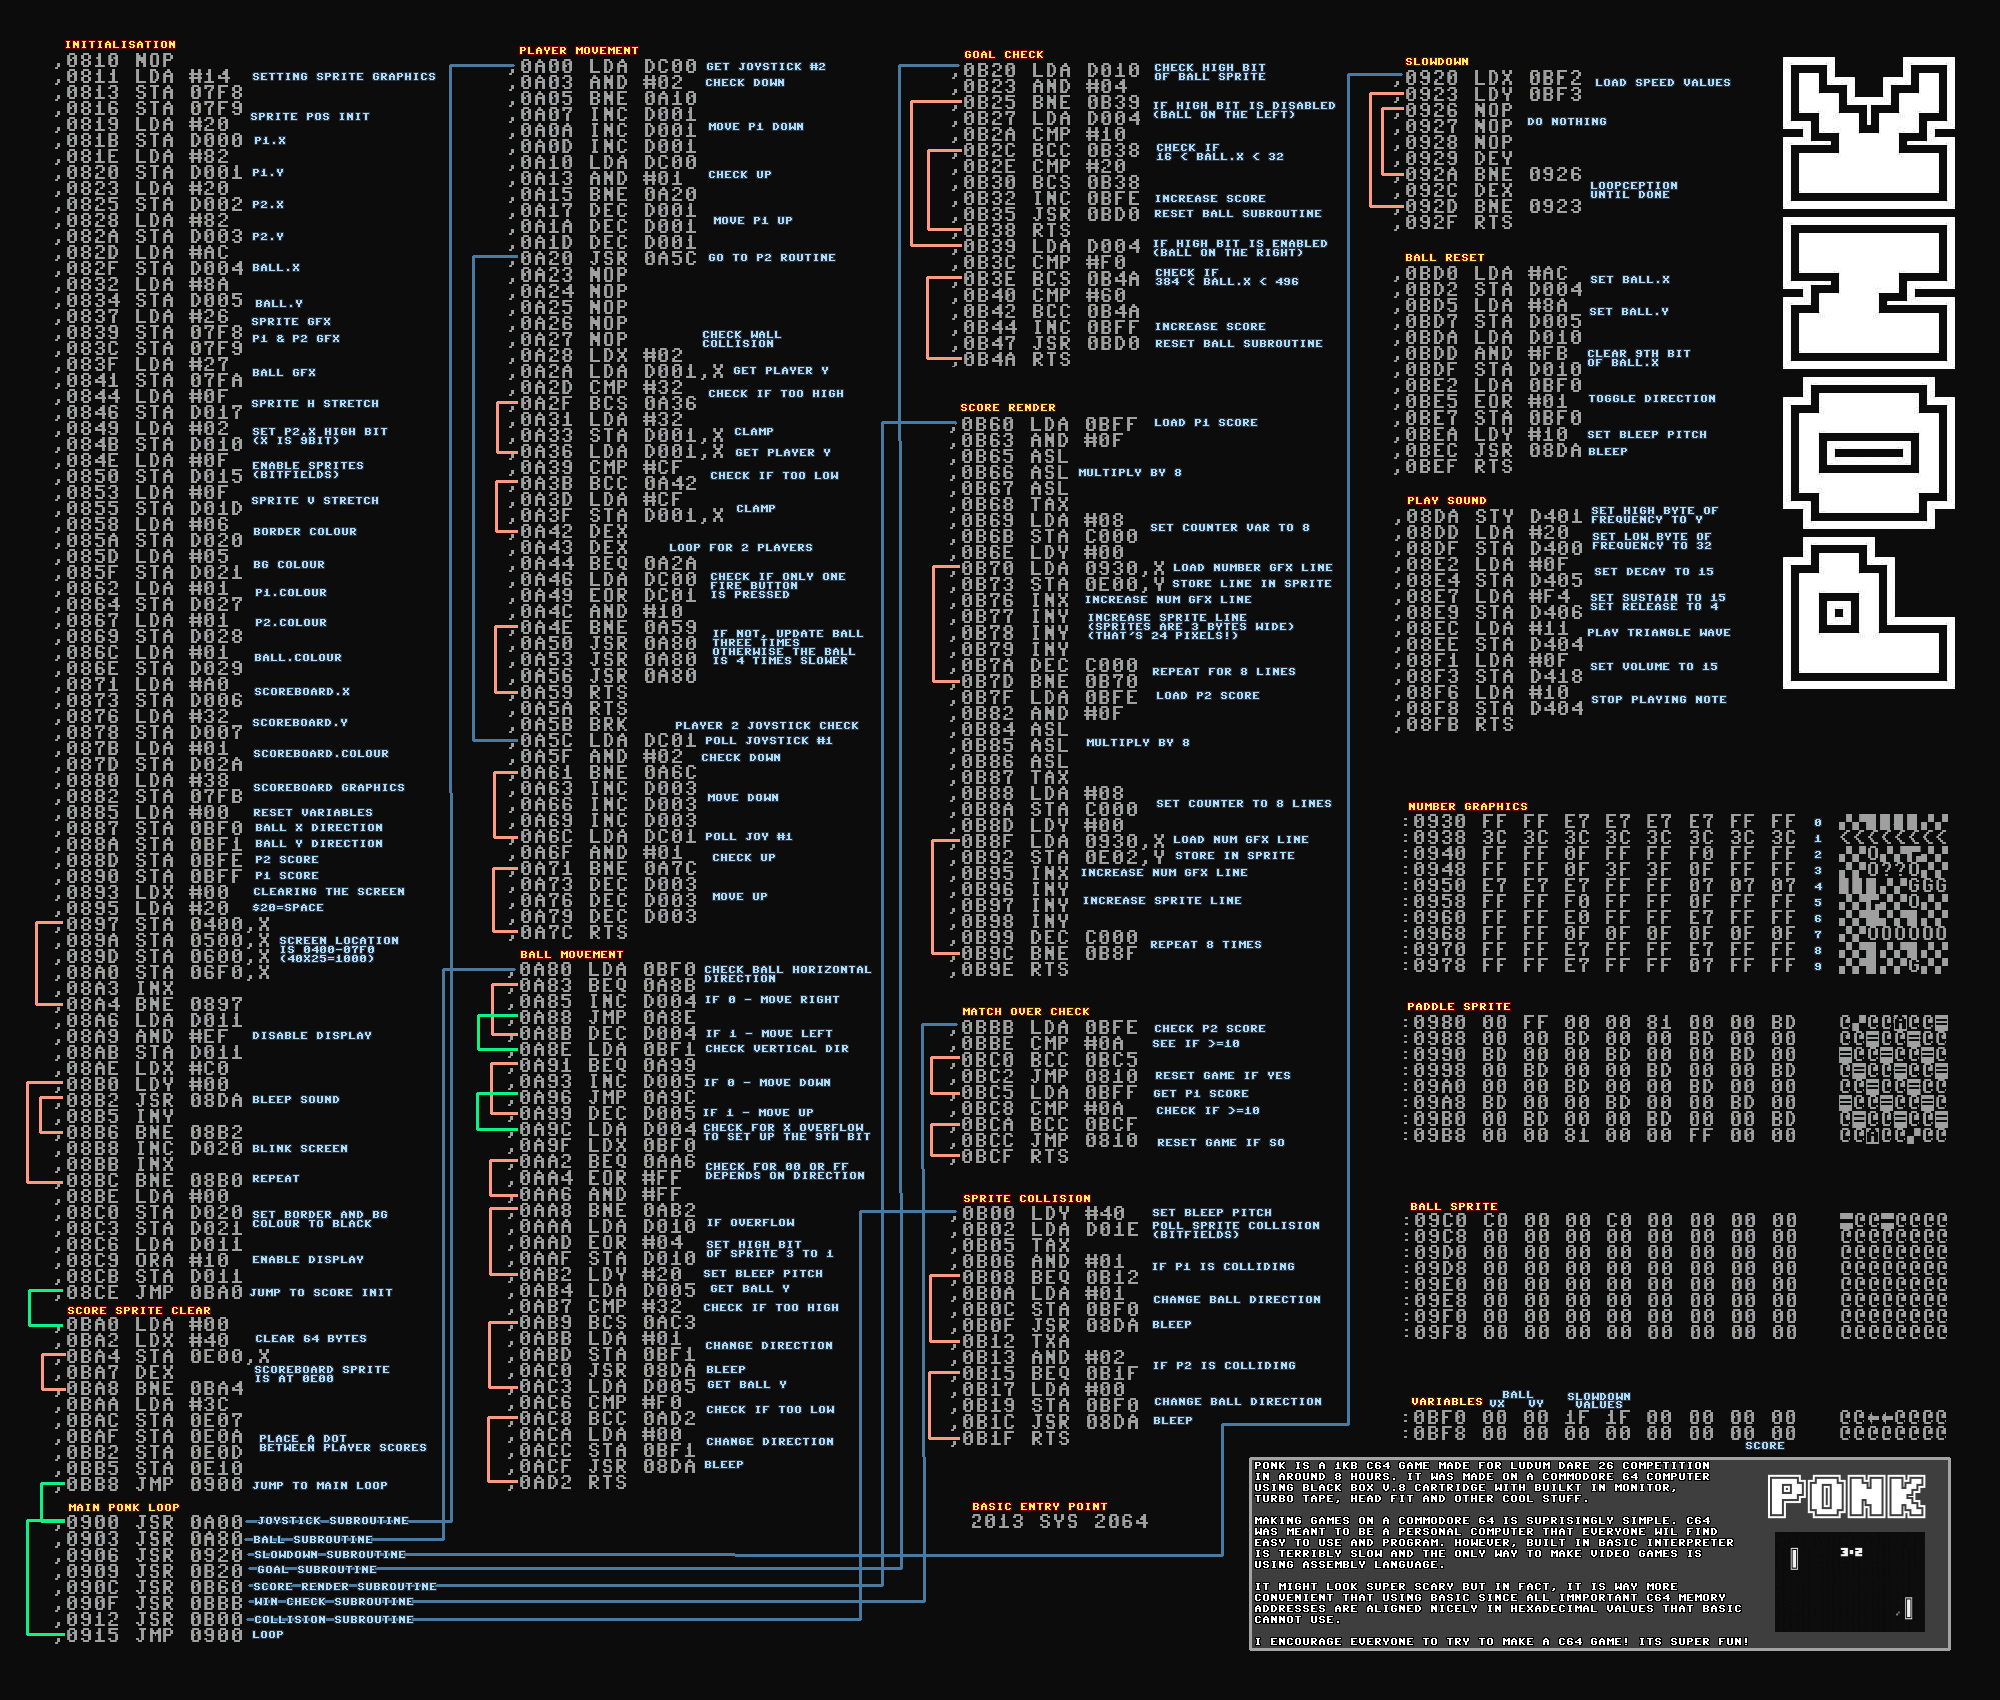 Assembly Programming Wallpaper. Programming Wallpaper, Programming Script Wallpaper and Computer Programming Wallpaper